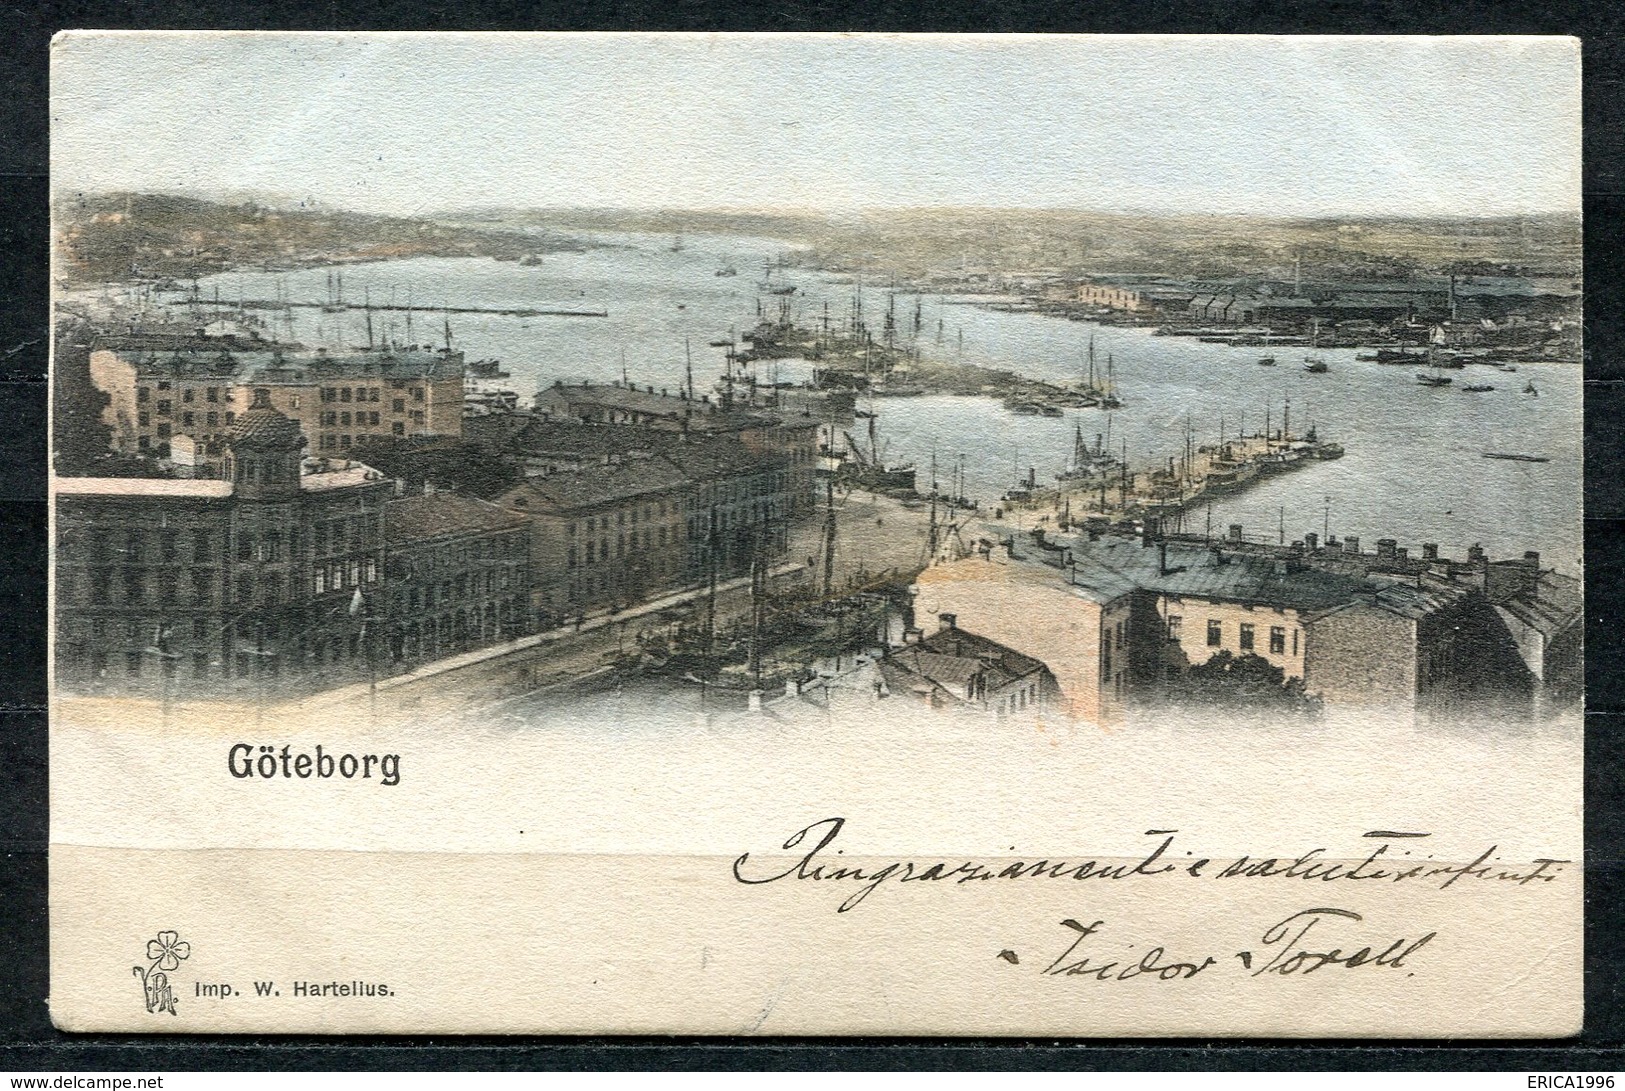 CARTOLINA CV2358 SVEZIA SWEDEN Göteborg, The Harbour, 1901, Viaggiata Per L'Italia, Formato Piccolo, Francobollo Asport - Svezia